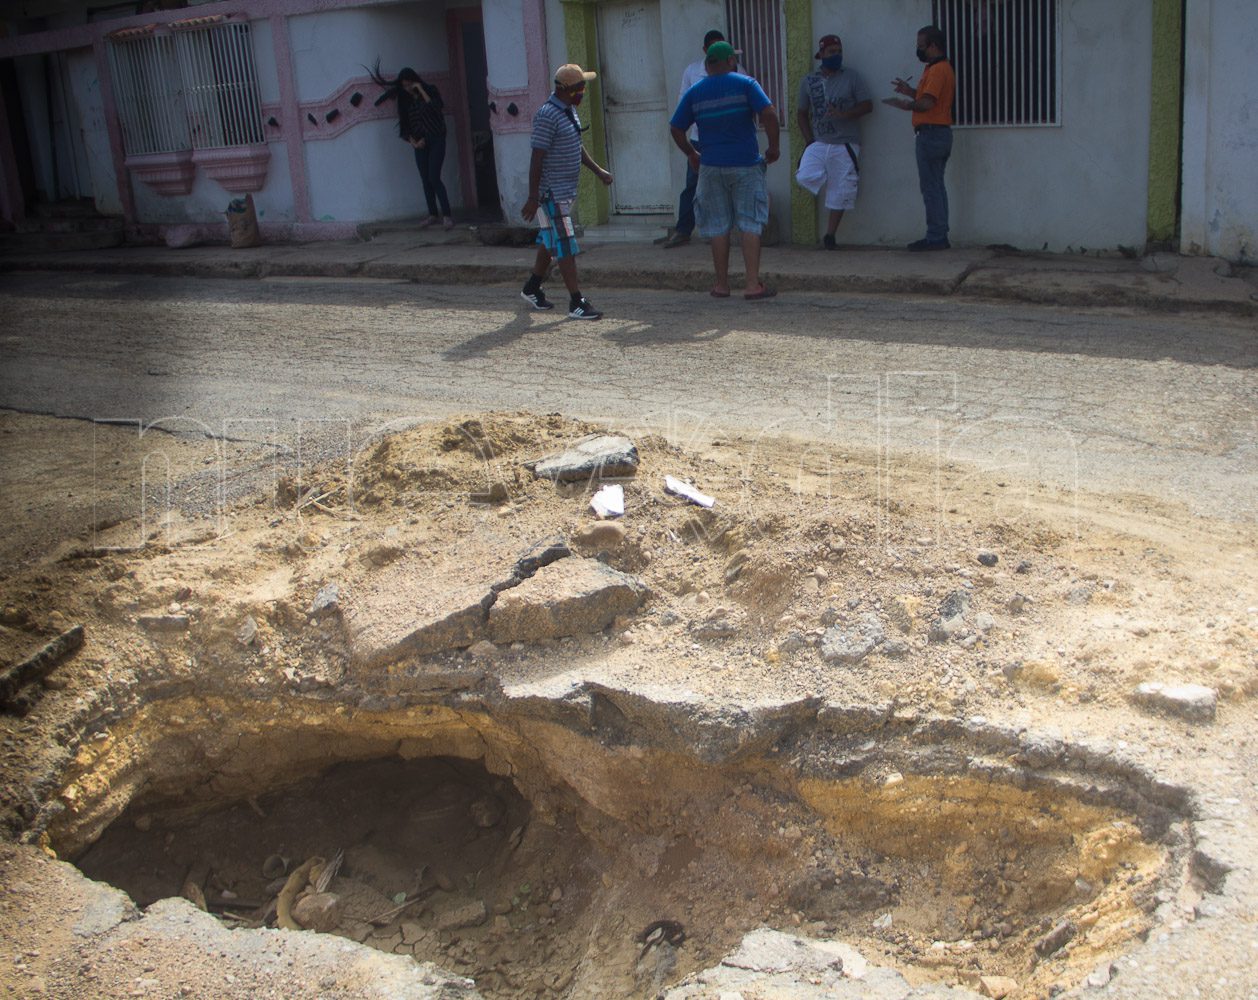  CORO | En la calle Cuba llaman a Hidrofalcón